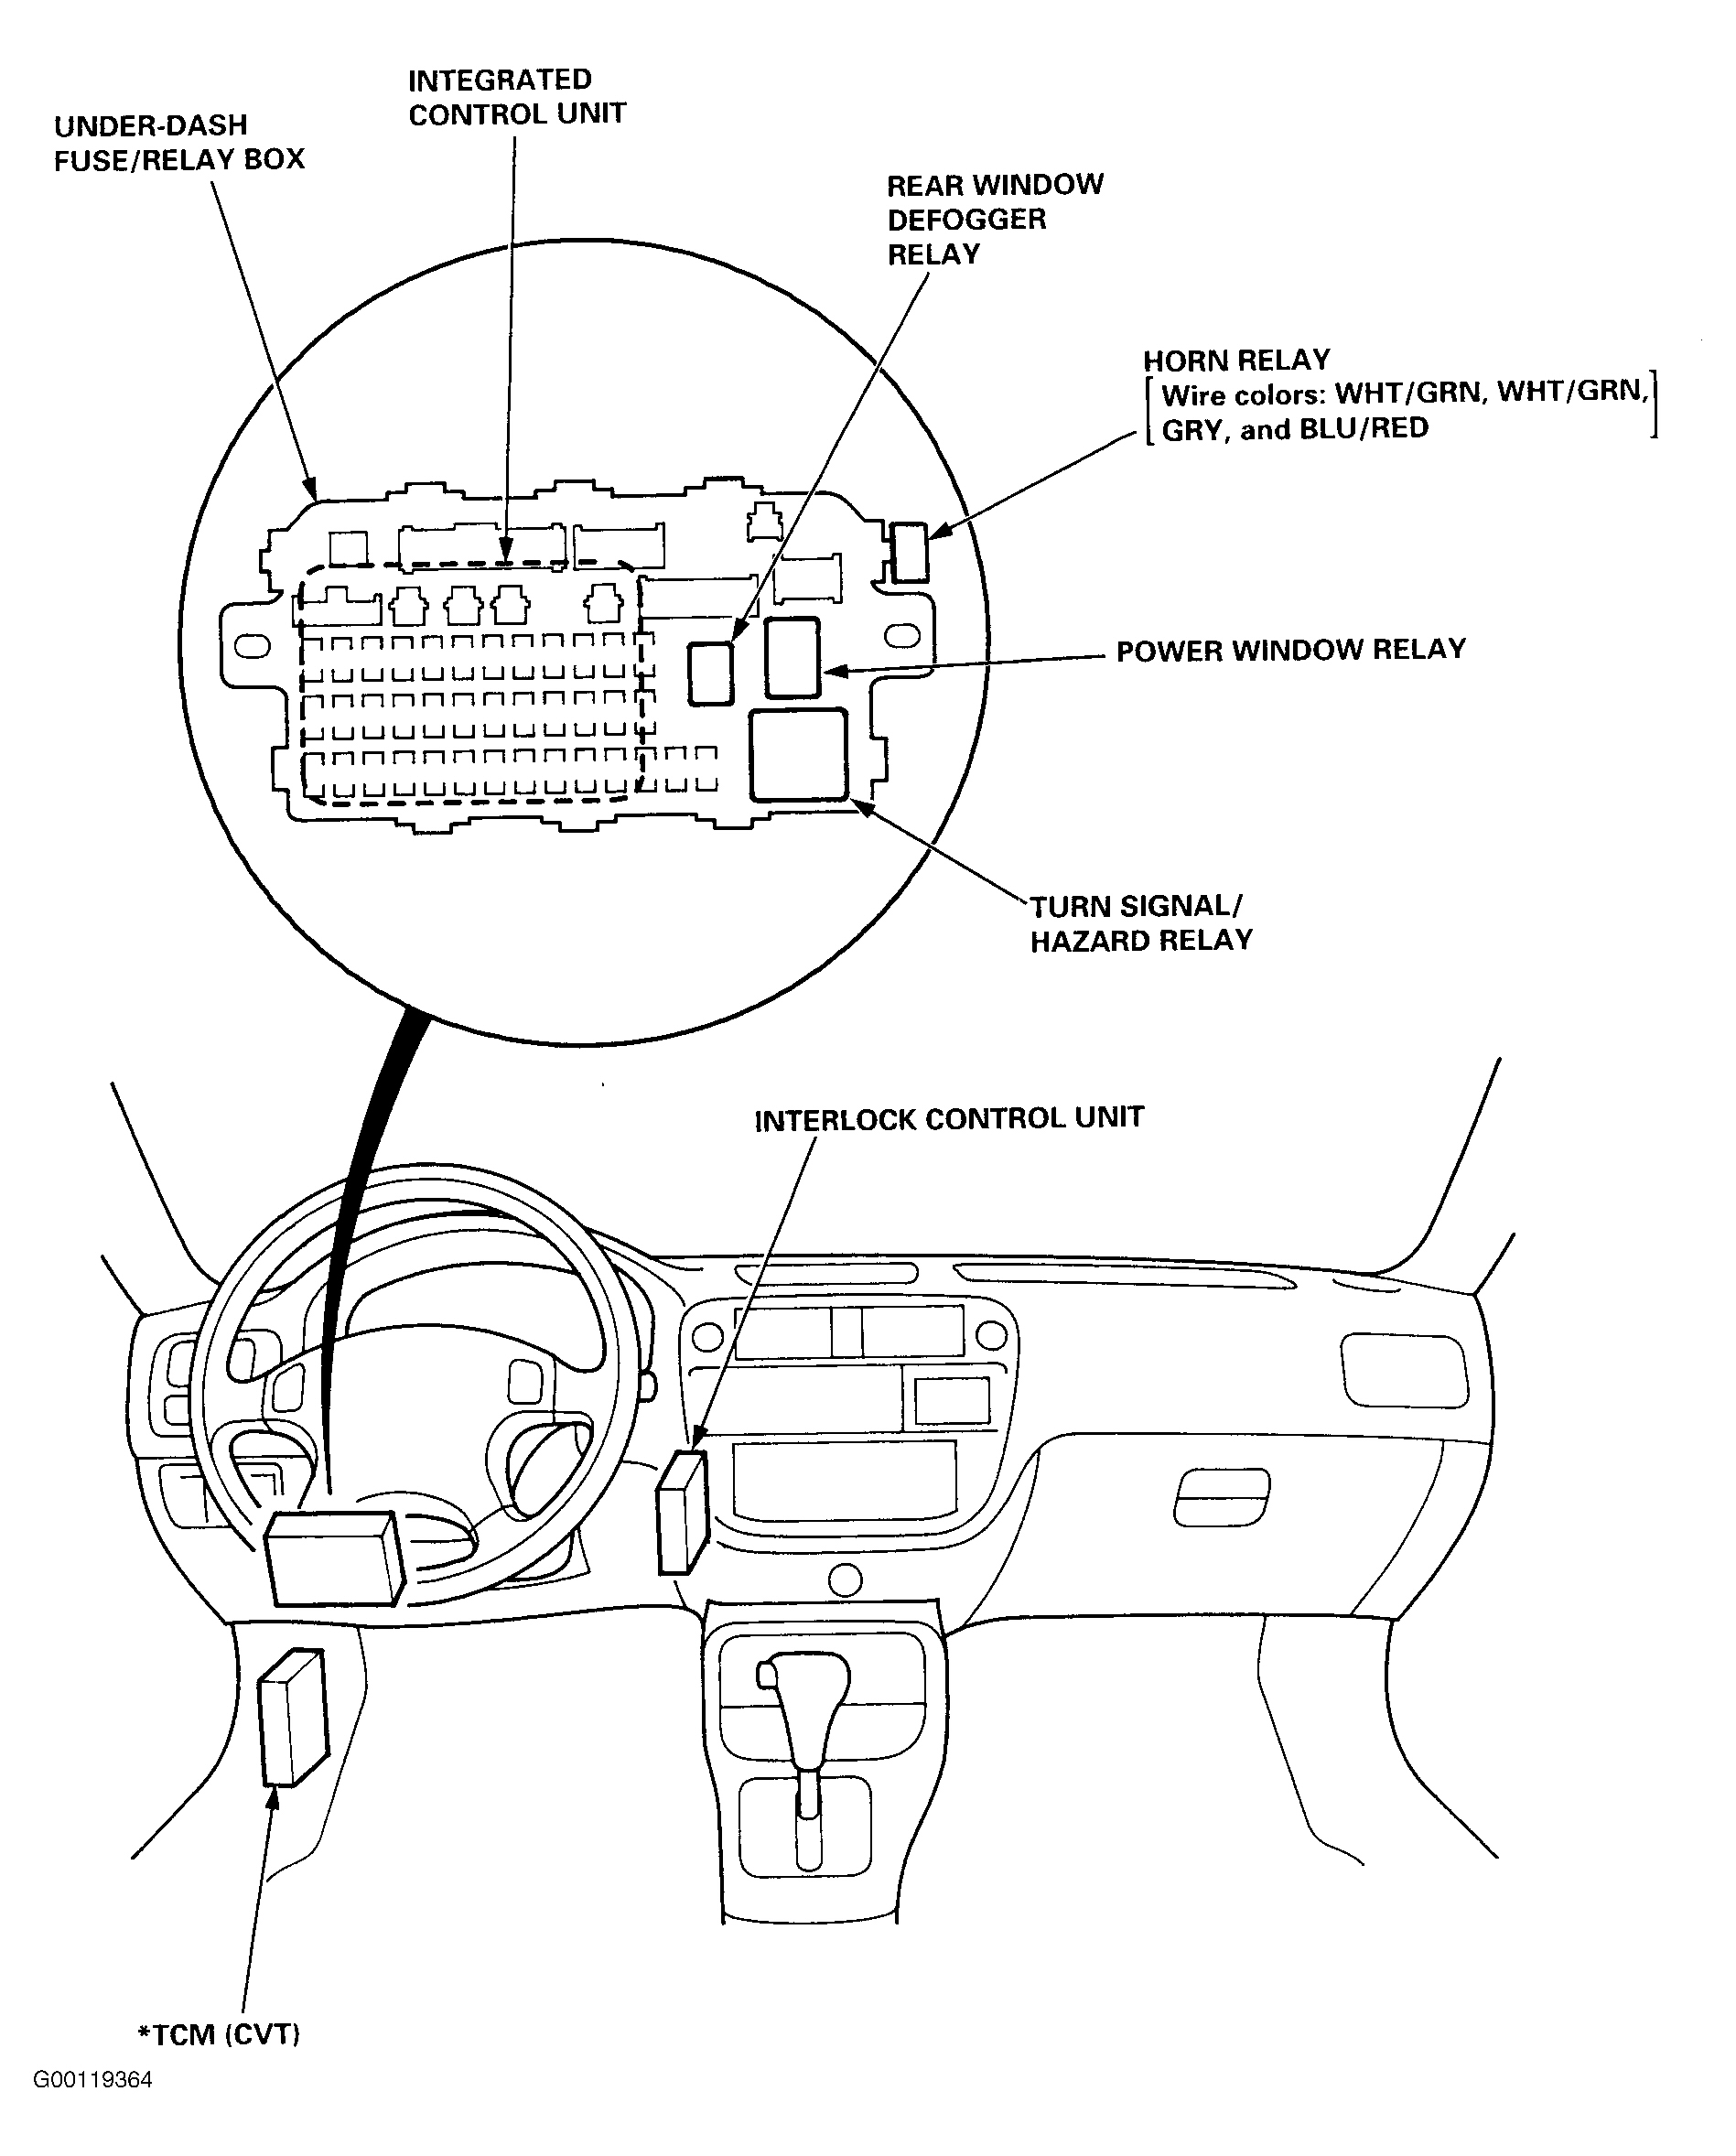 Honda Civic VP 1999 - Component Locations -  Locating Under-Dash Fuse/Relay Box (1996-97)